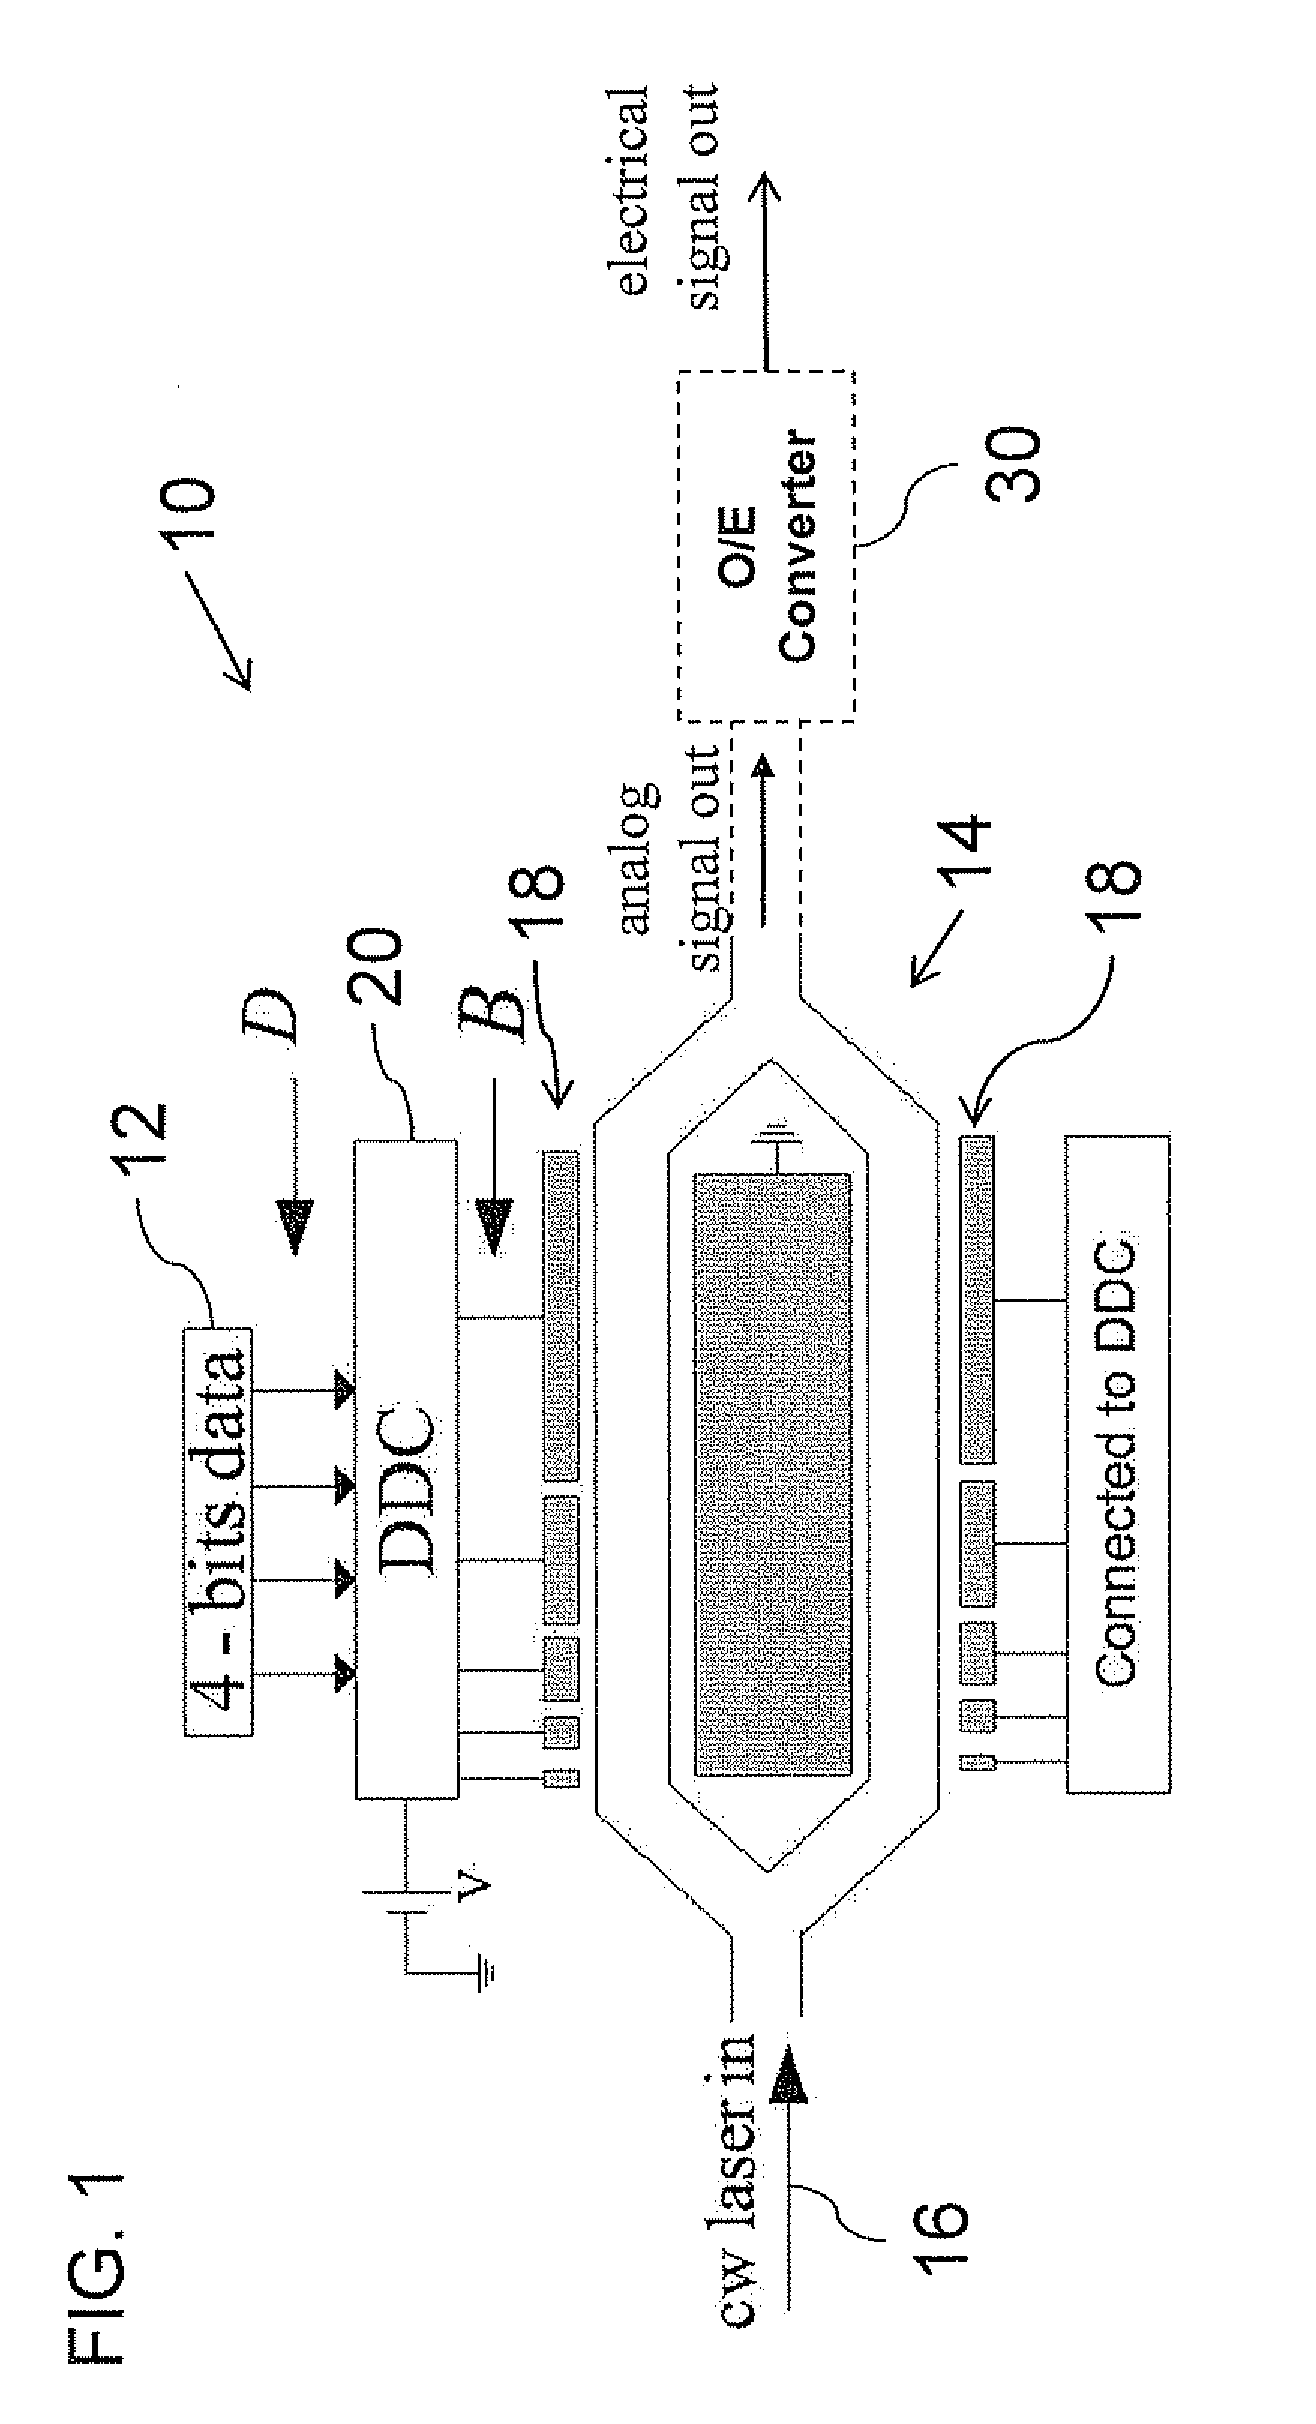 Linearized optical digital-to-analog modulator